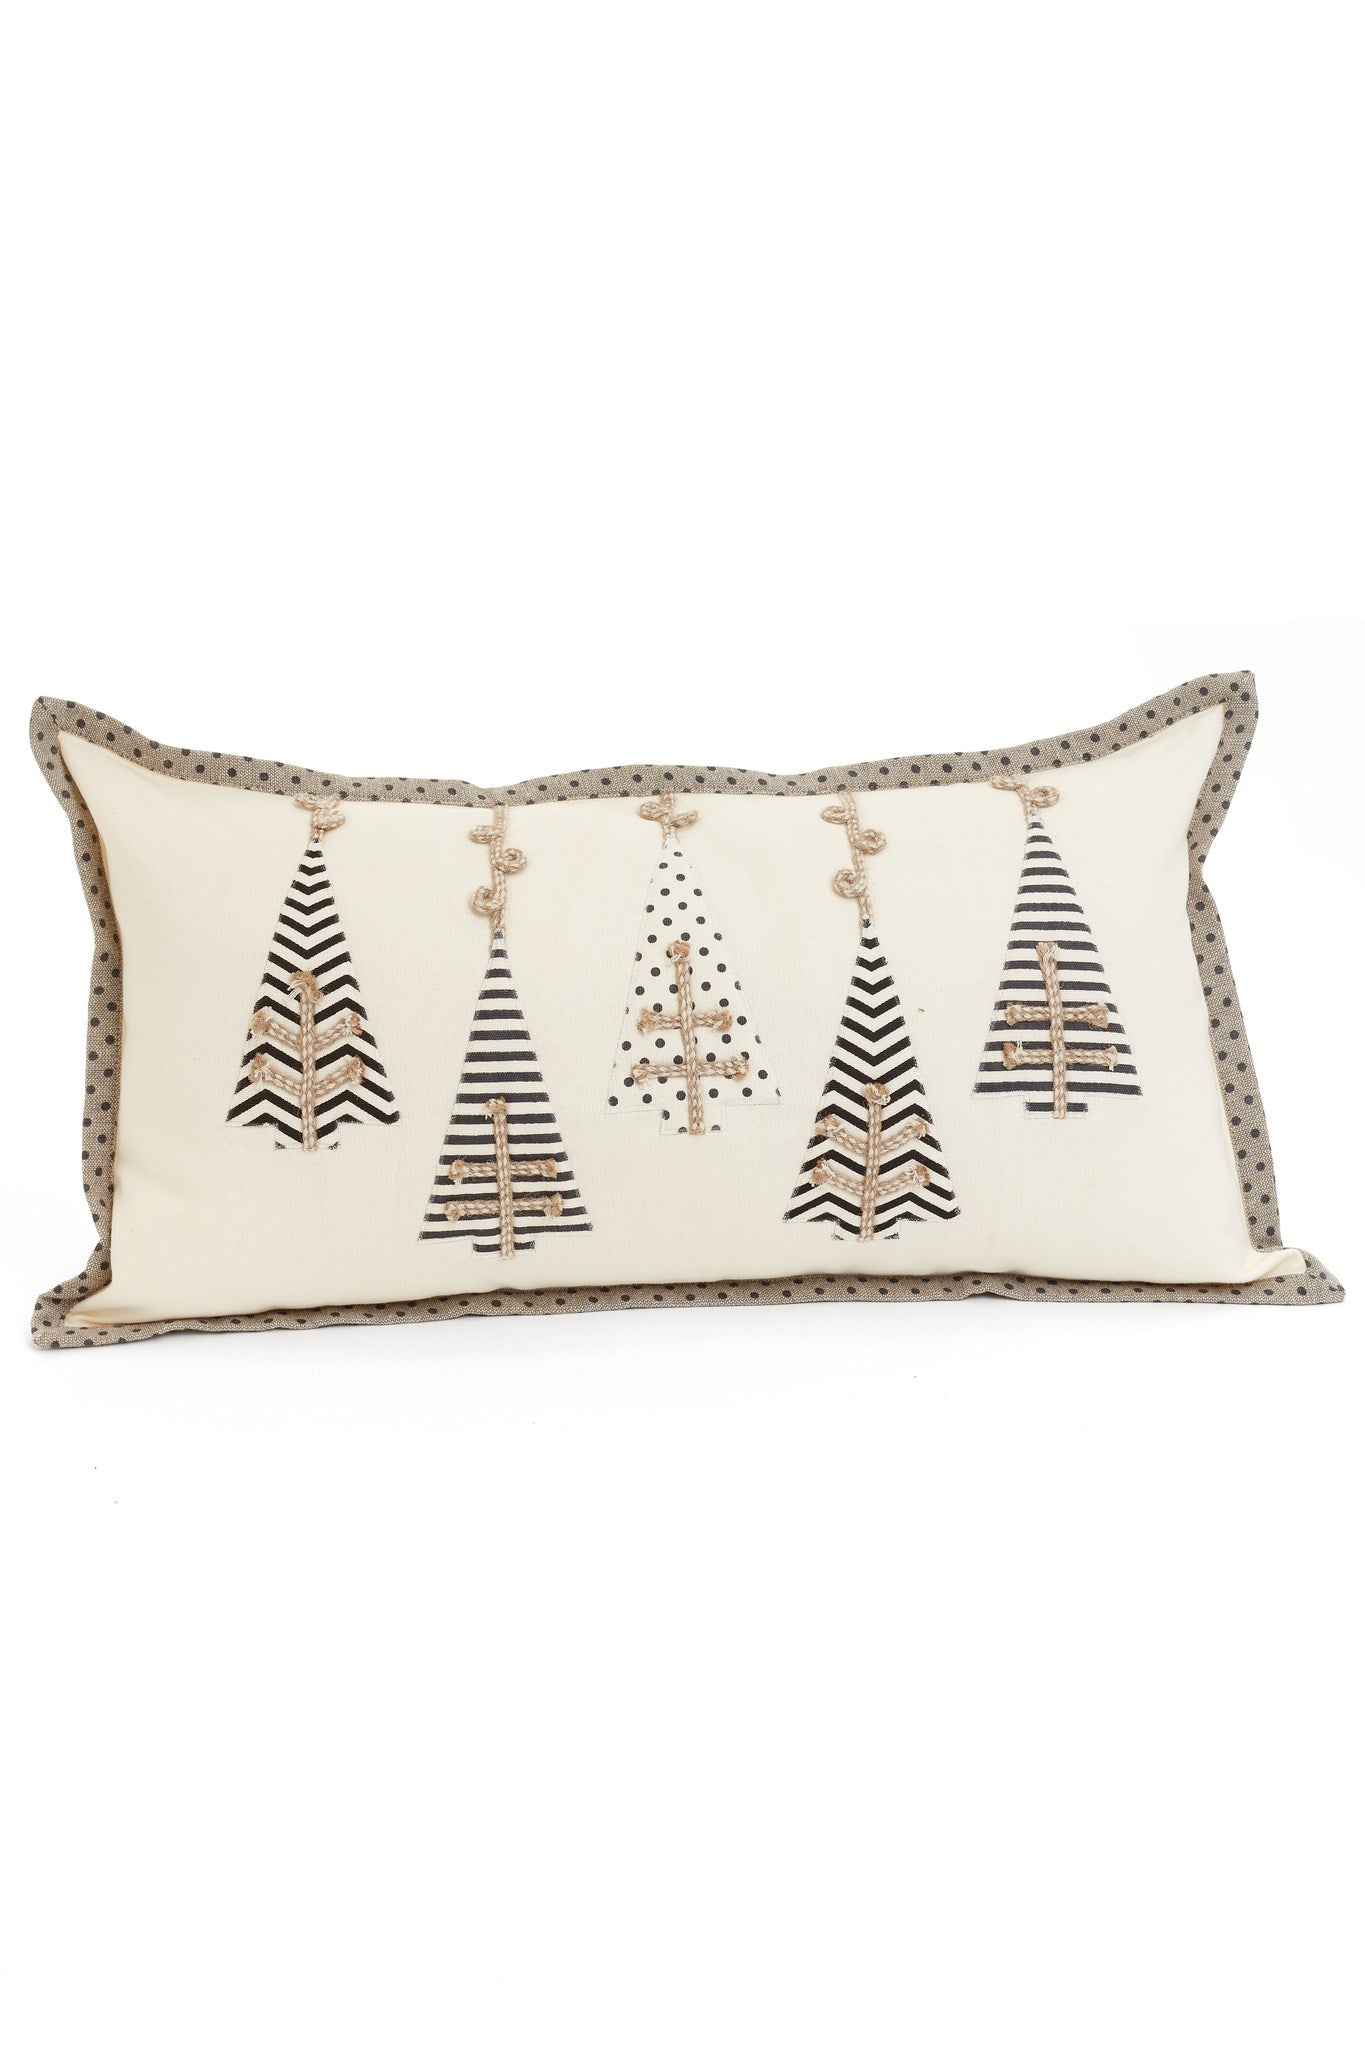 Cream and Black Christmas Tree Pillow